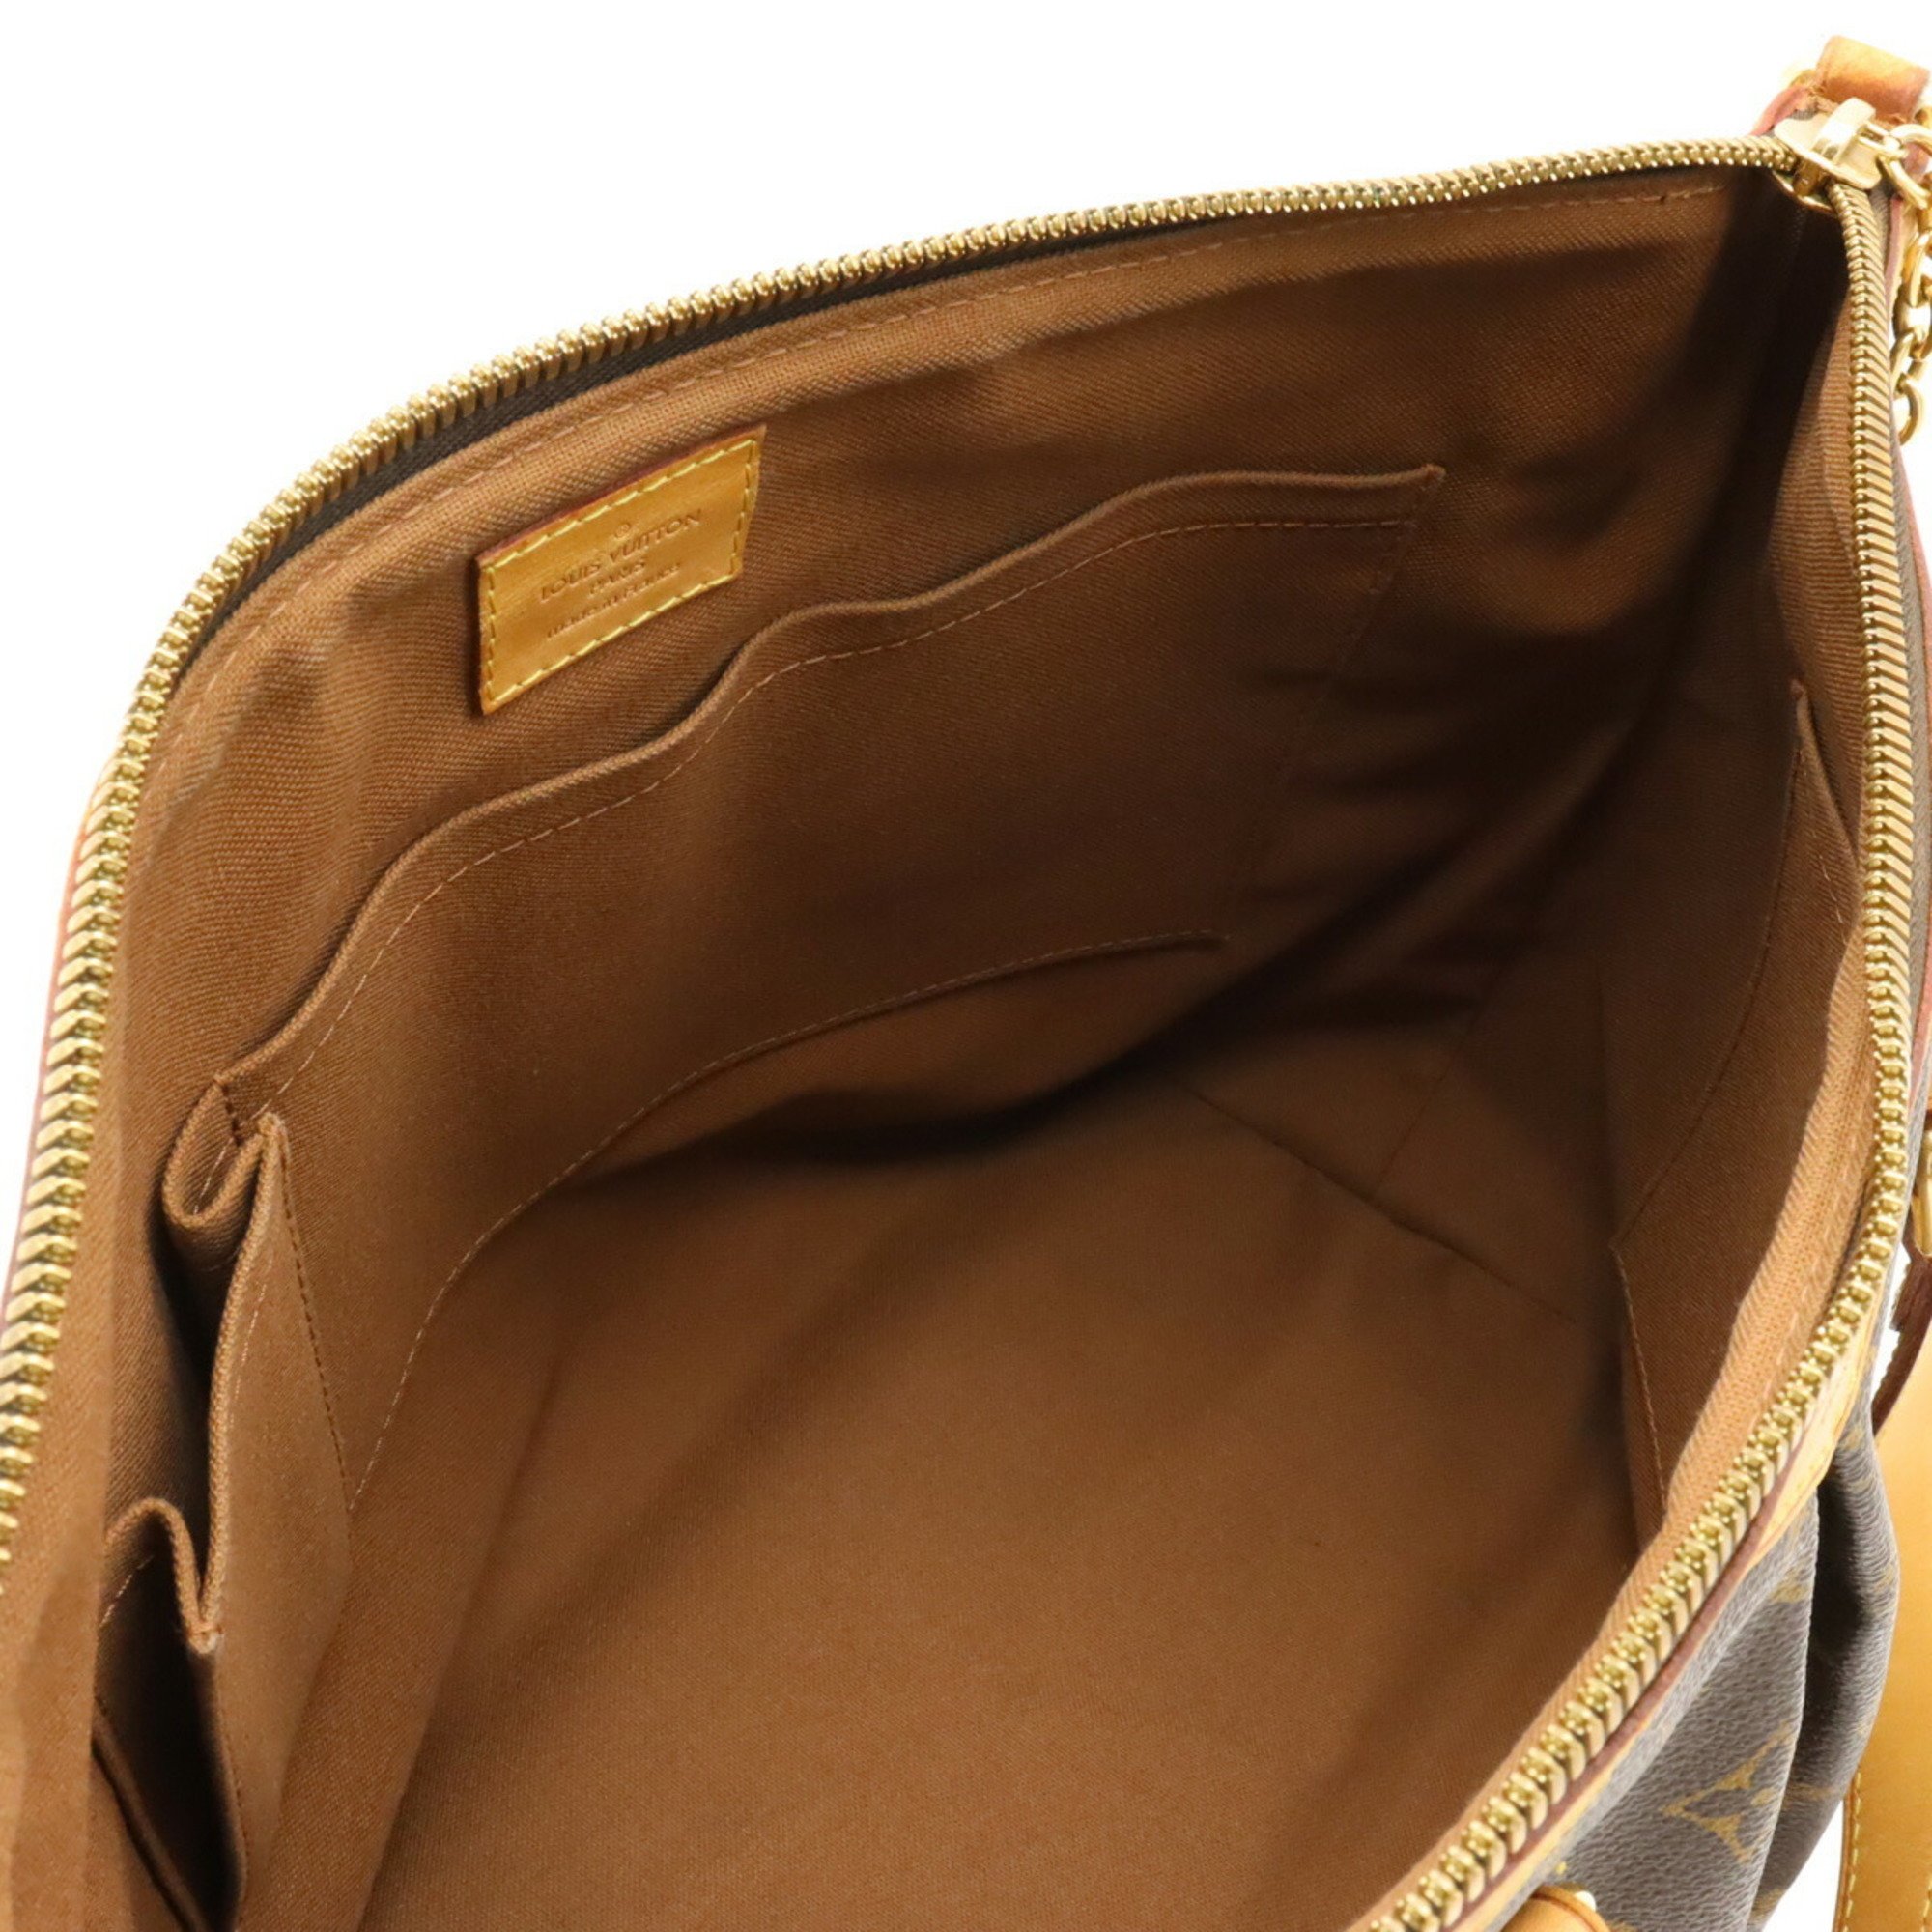 LOUIS VUITTON Louis Vuitton Monogram Palermo PM Tote Bag Handbag Shoulder M40145